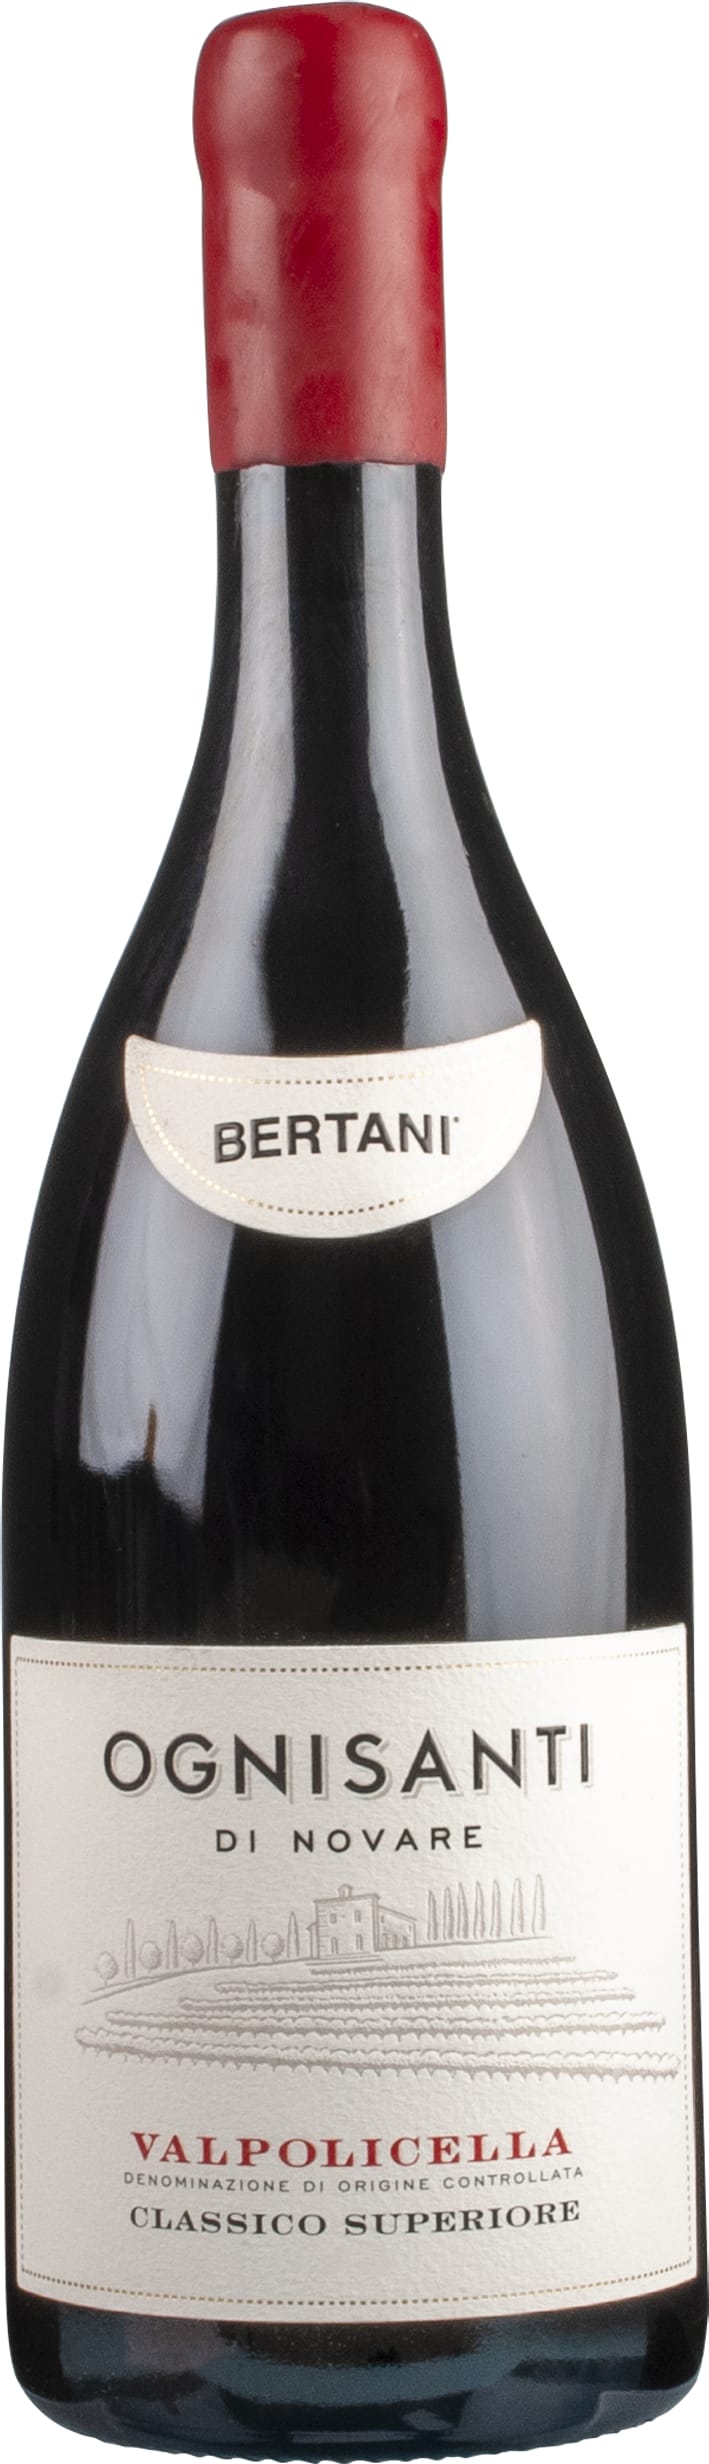 Bertani Ognisanti Valpolicella Classico Superiore DOC 2021 75cl - Buy Bertani Wines from GREAT WINES DIRECT wine shop